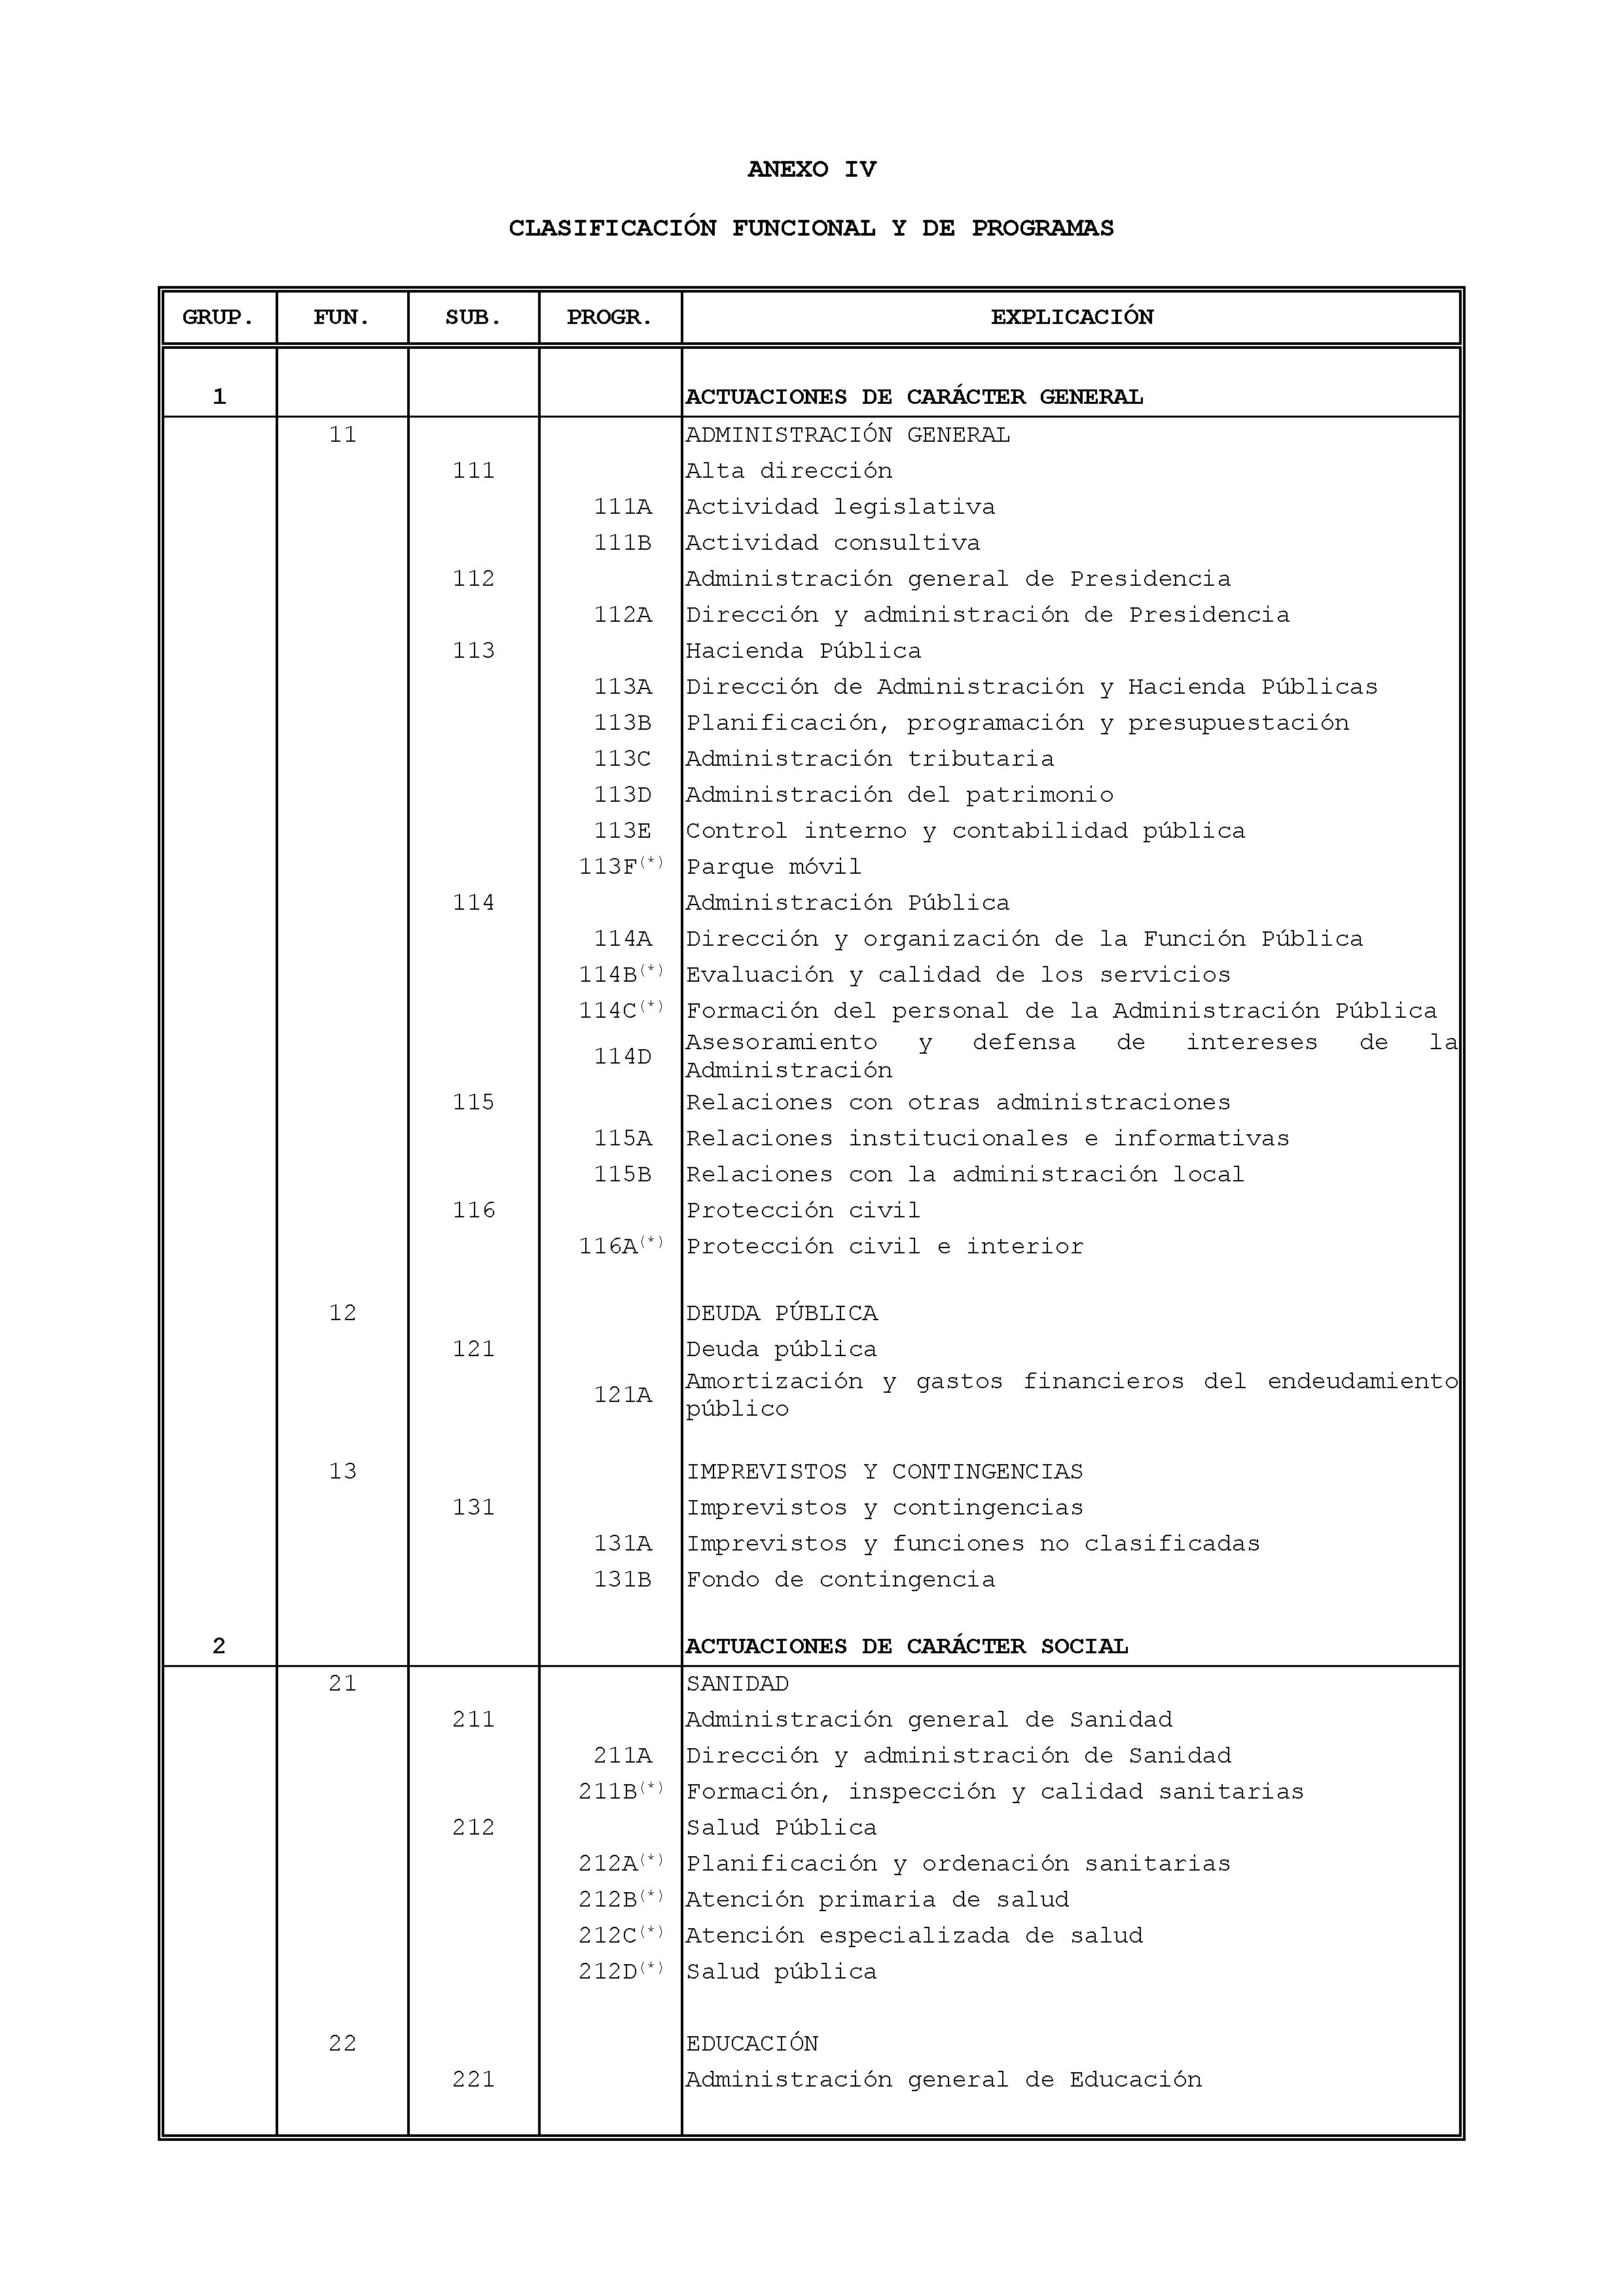 ANEXO IV CLASIFICACIÓN FUNCIONAL Y DE PROGRAMAS Pag 1